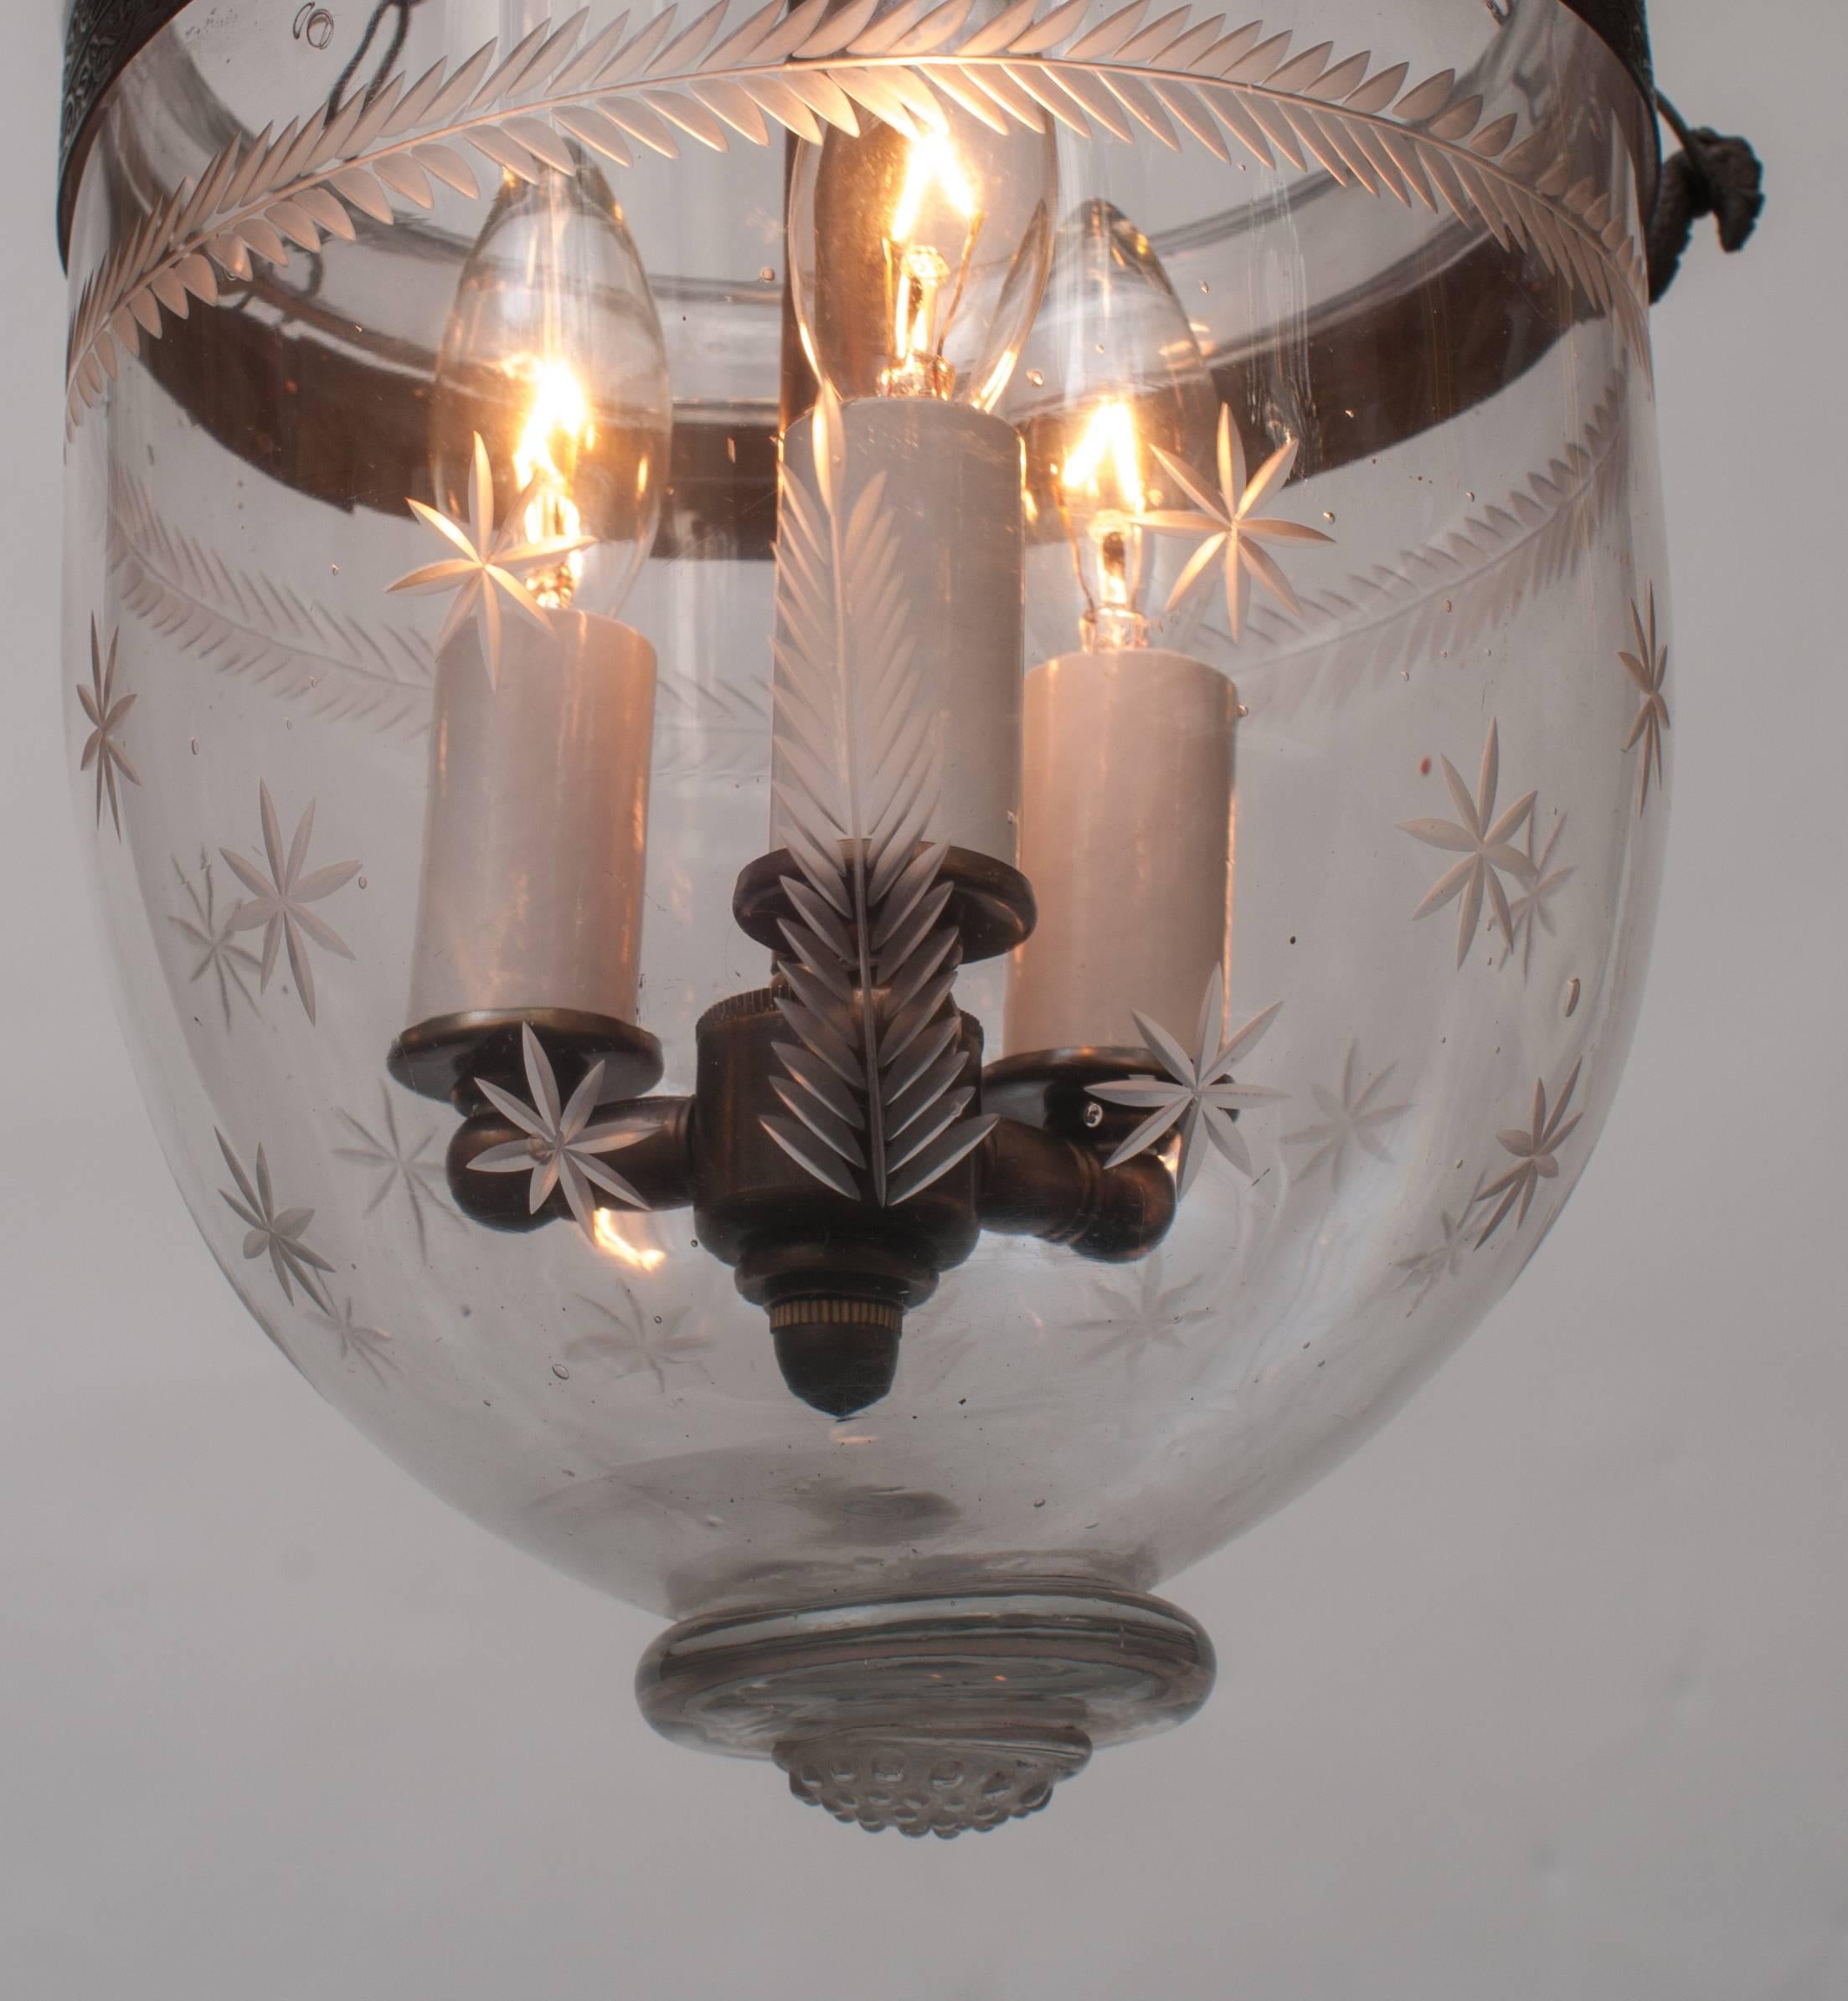 English Petite Bell Jar Lantern, Etched Star and Fern Pattern